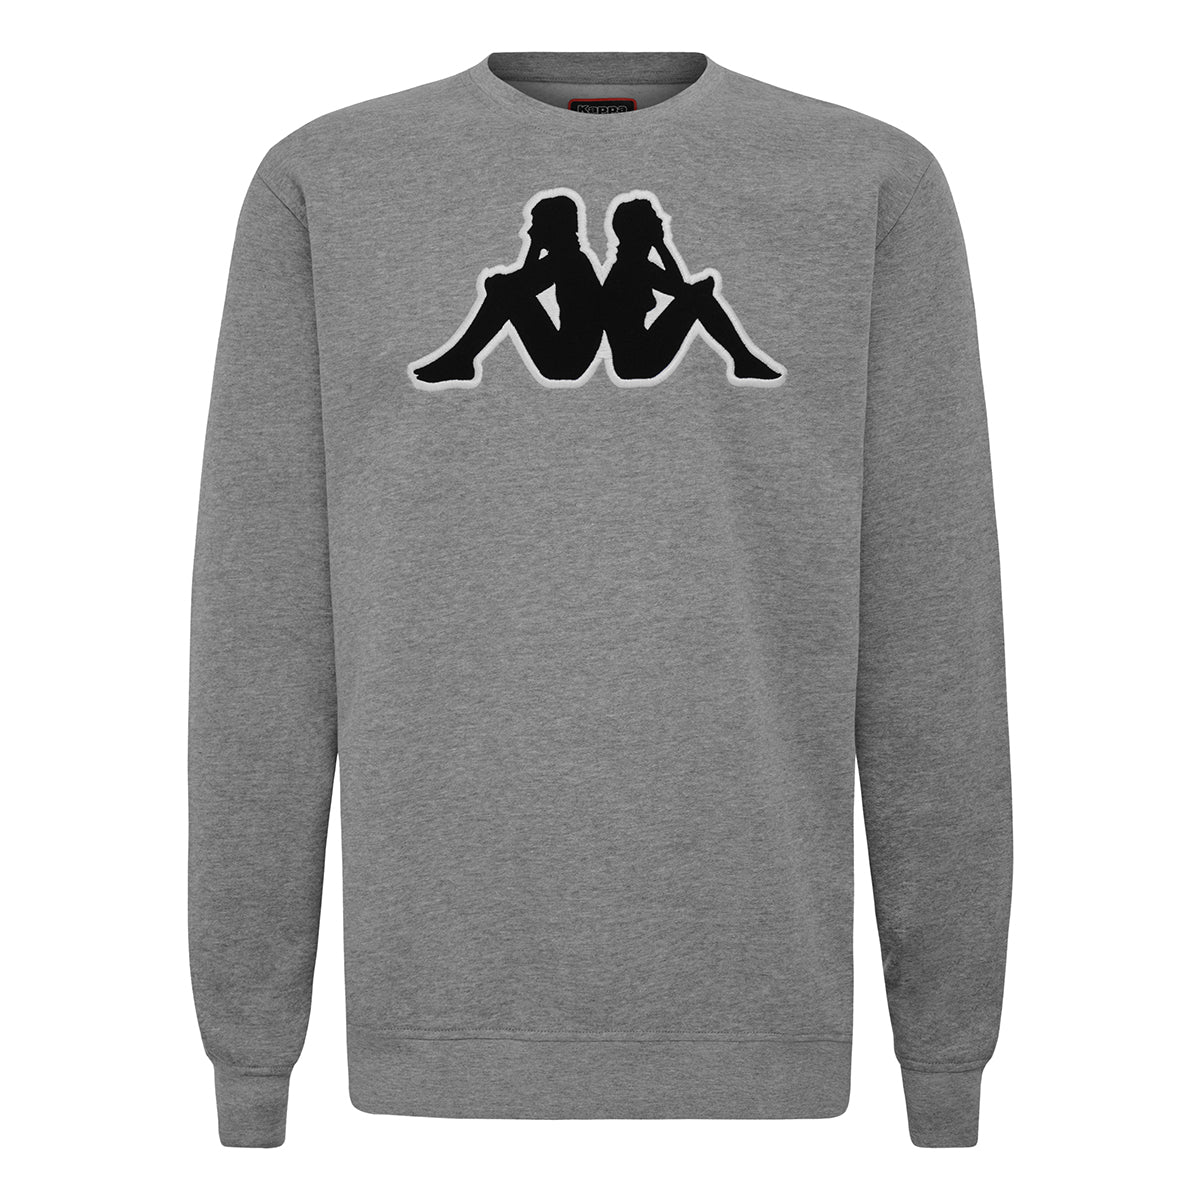 Sweatshirt Airivit Gris Homme - Image 1